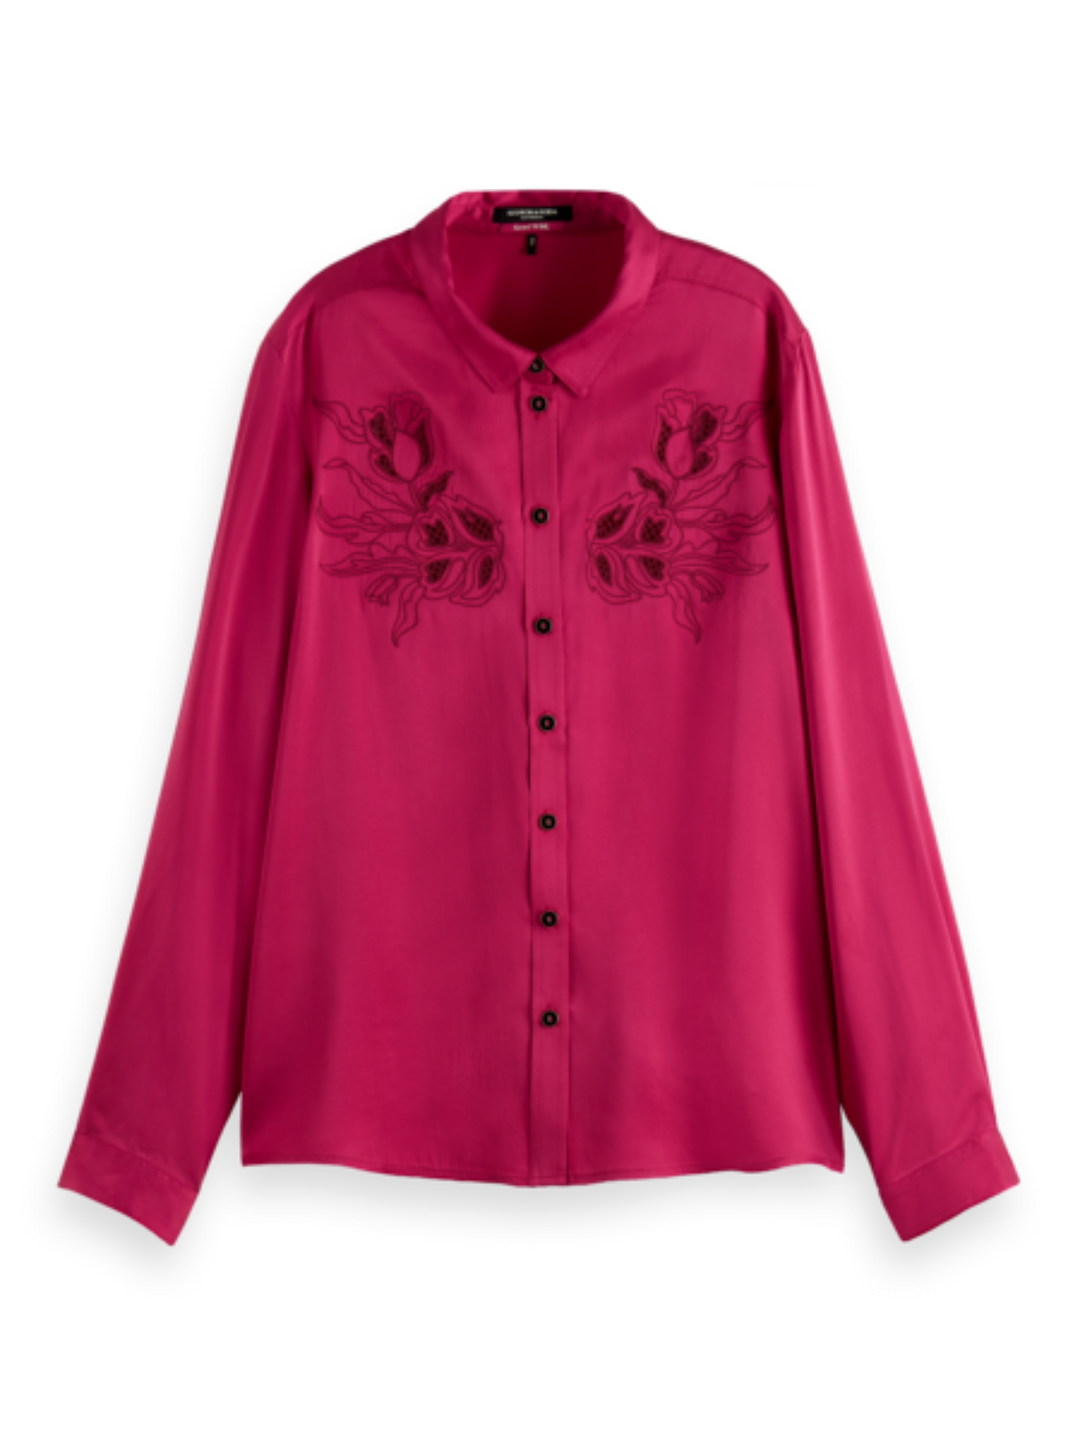 Scotch & Soda Jo Silk Embroidered Shirt in Pink